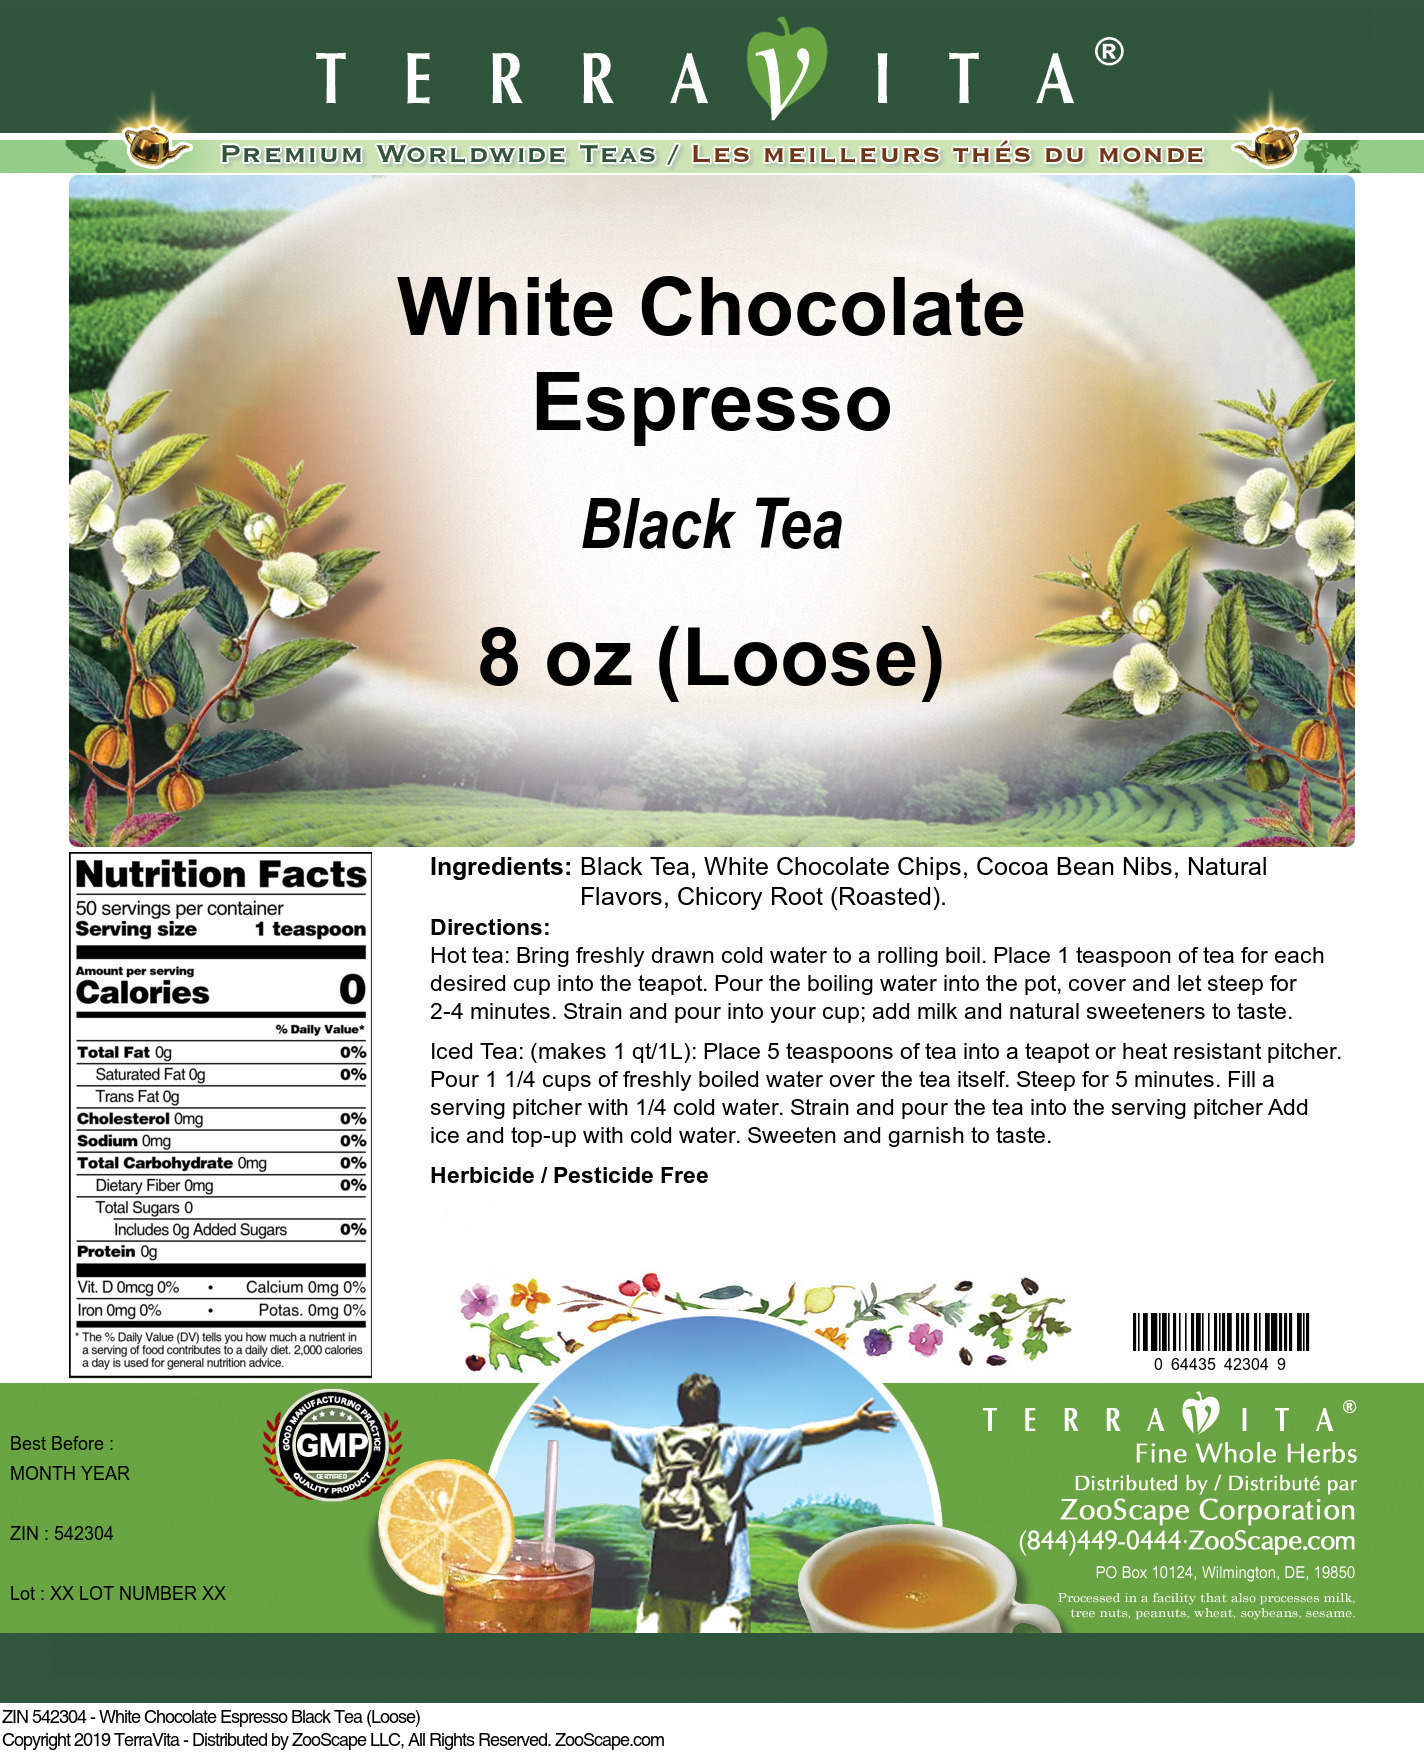 White Chocolate Espresso Black Tea (Loose) - Label